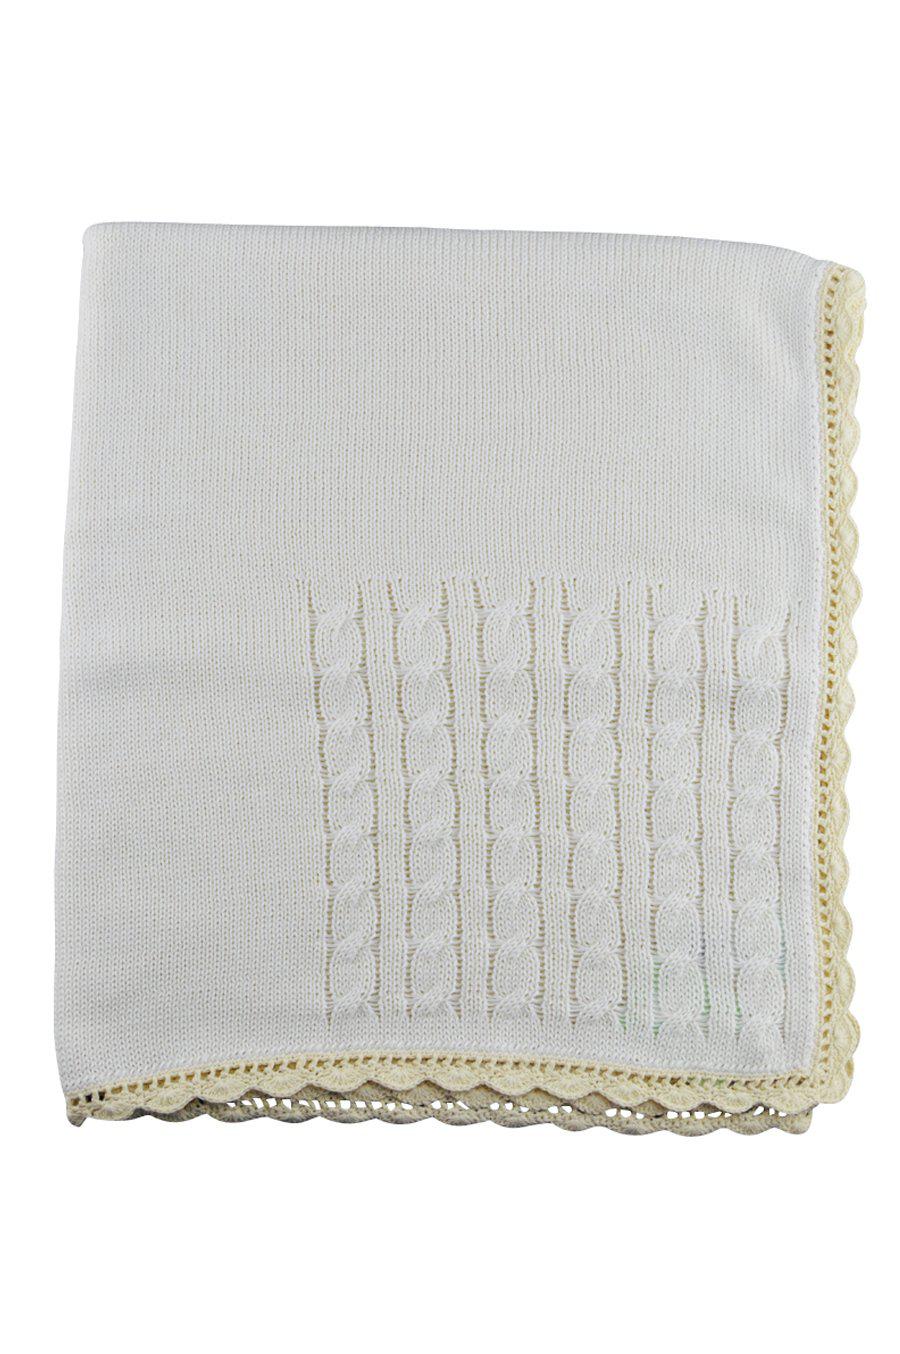 Ivory Knitted Blanket - Little Threads Inc. Children's Clothing